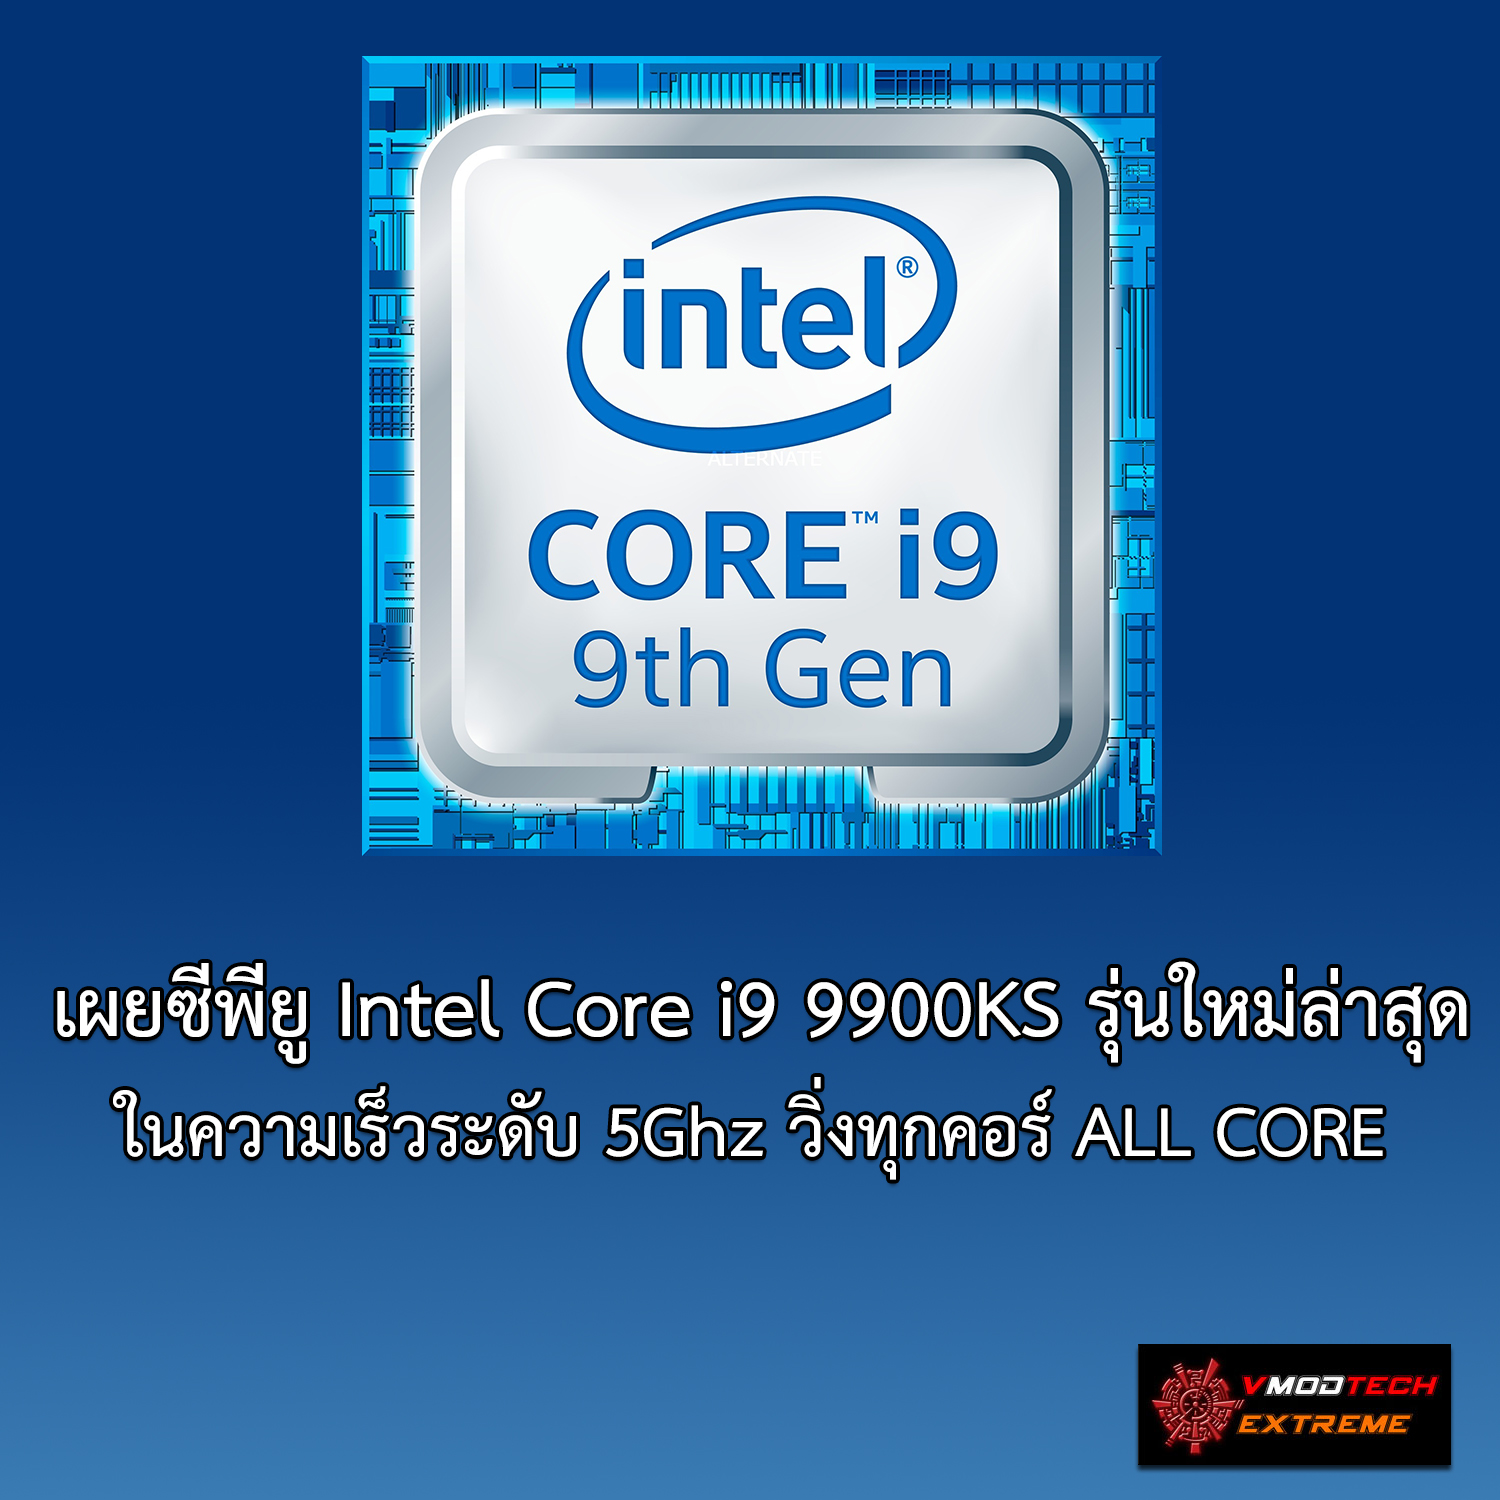 intel core i9 9900ks มาใหม่? ซีพียู Intel Core i9 9900KS รุ่นใหม่ล่าสุดในความเร็วระดับ 5Ghz วิ่งทุกคอร์ ALL CORE 